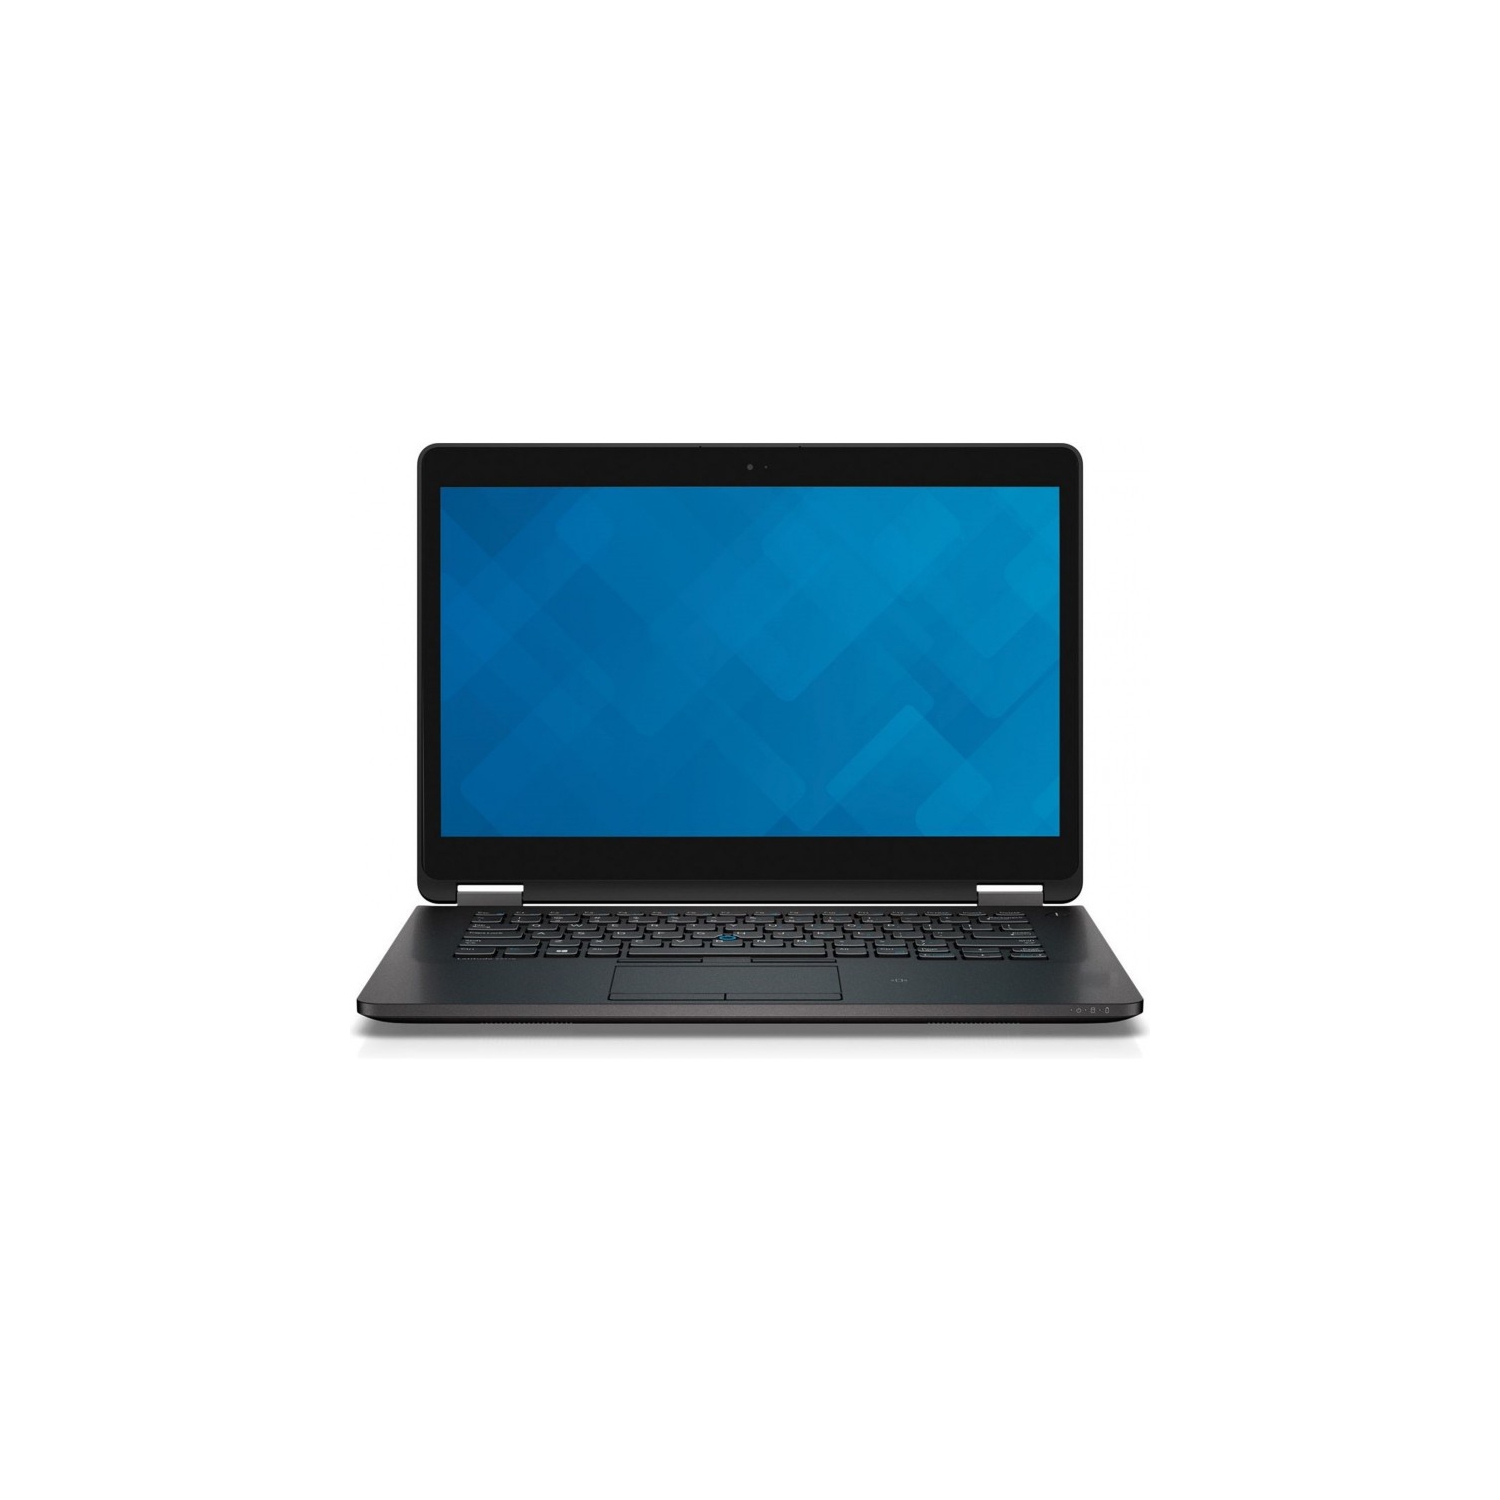 Refurbished (Excellent) - Dell Latitude E7470 14" Laptop, Intel Core i7 6600U up to 3.4GHz, 8G DDR4, 256G SSD, Win10 Pro 64 Bit (EN/FR/ES)